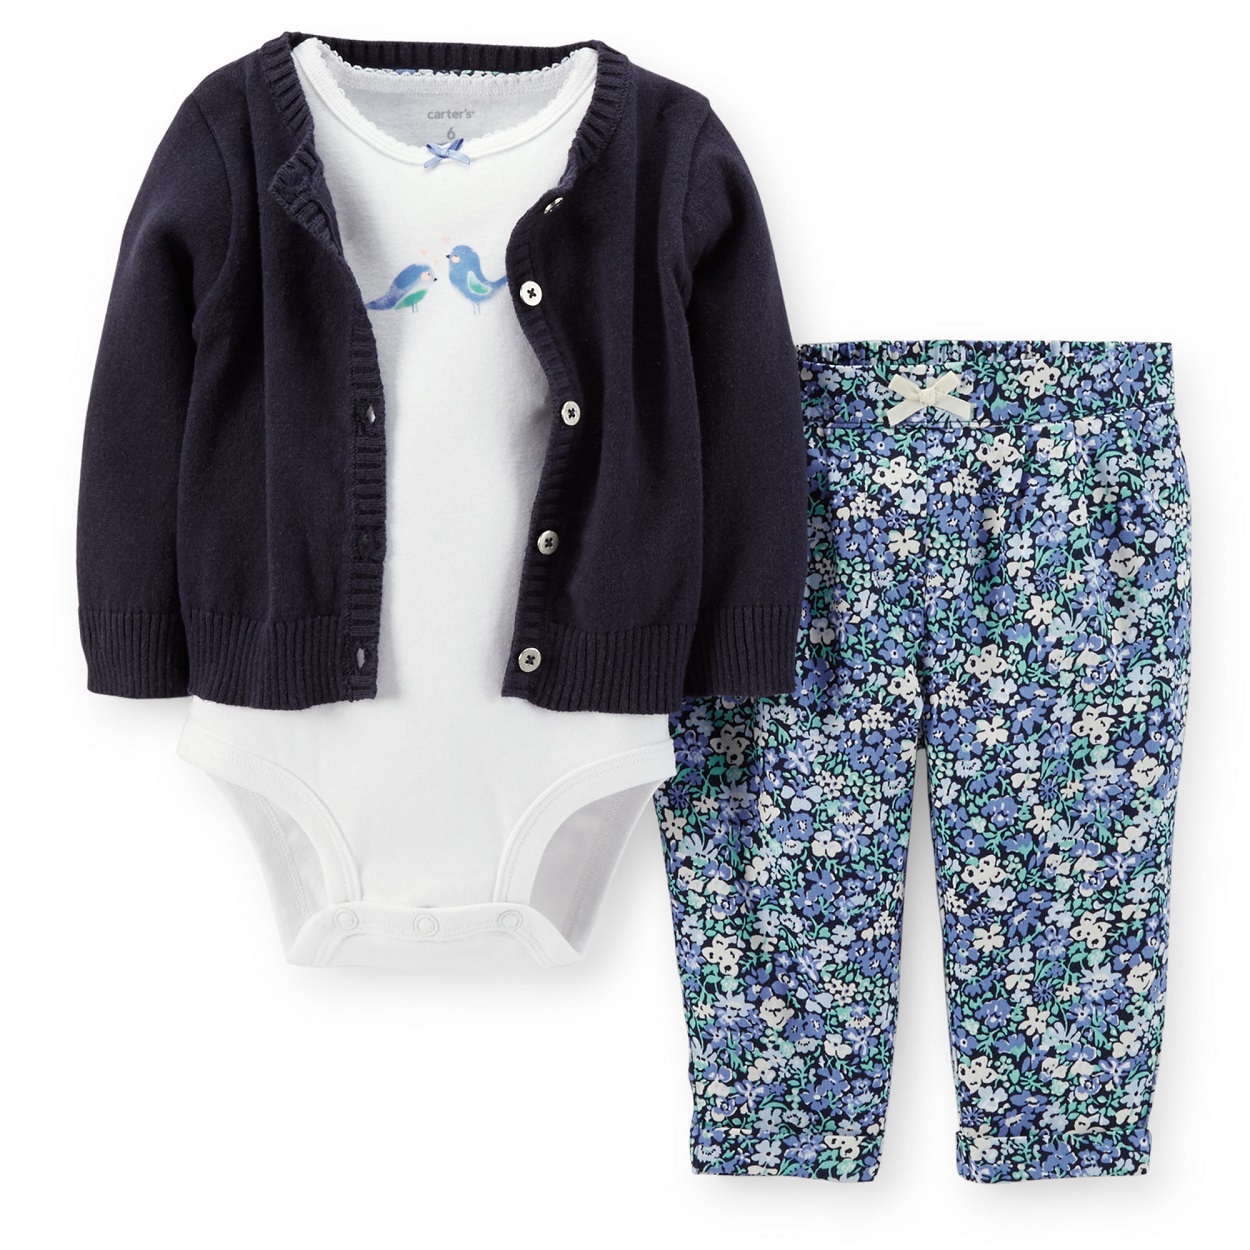 Carter's Baby Girls' 3-Piece Cardigan Set - Blue Floral - 3 Months